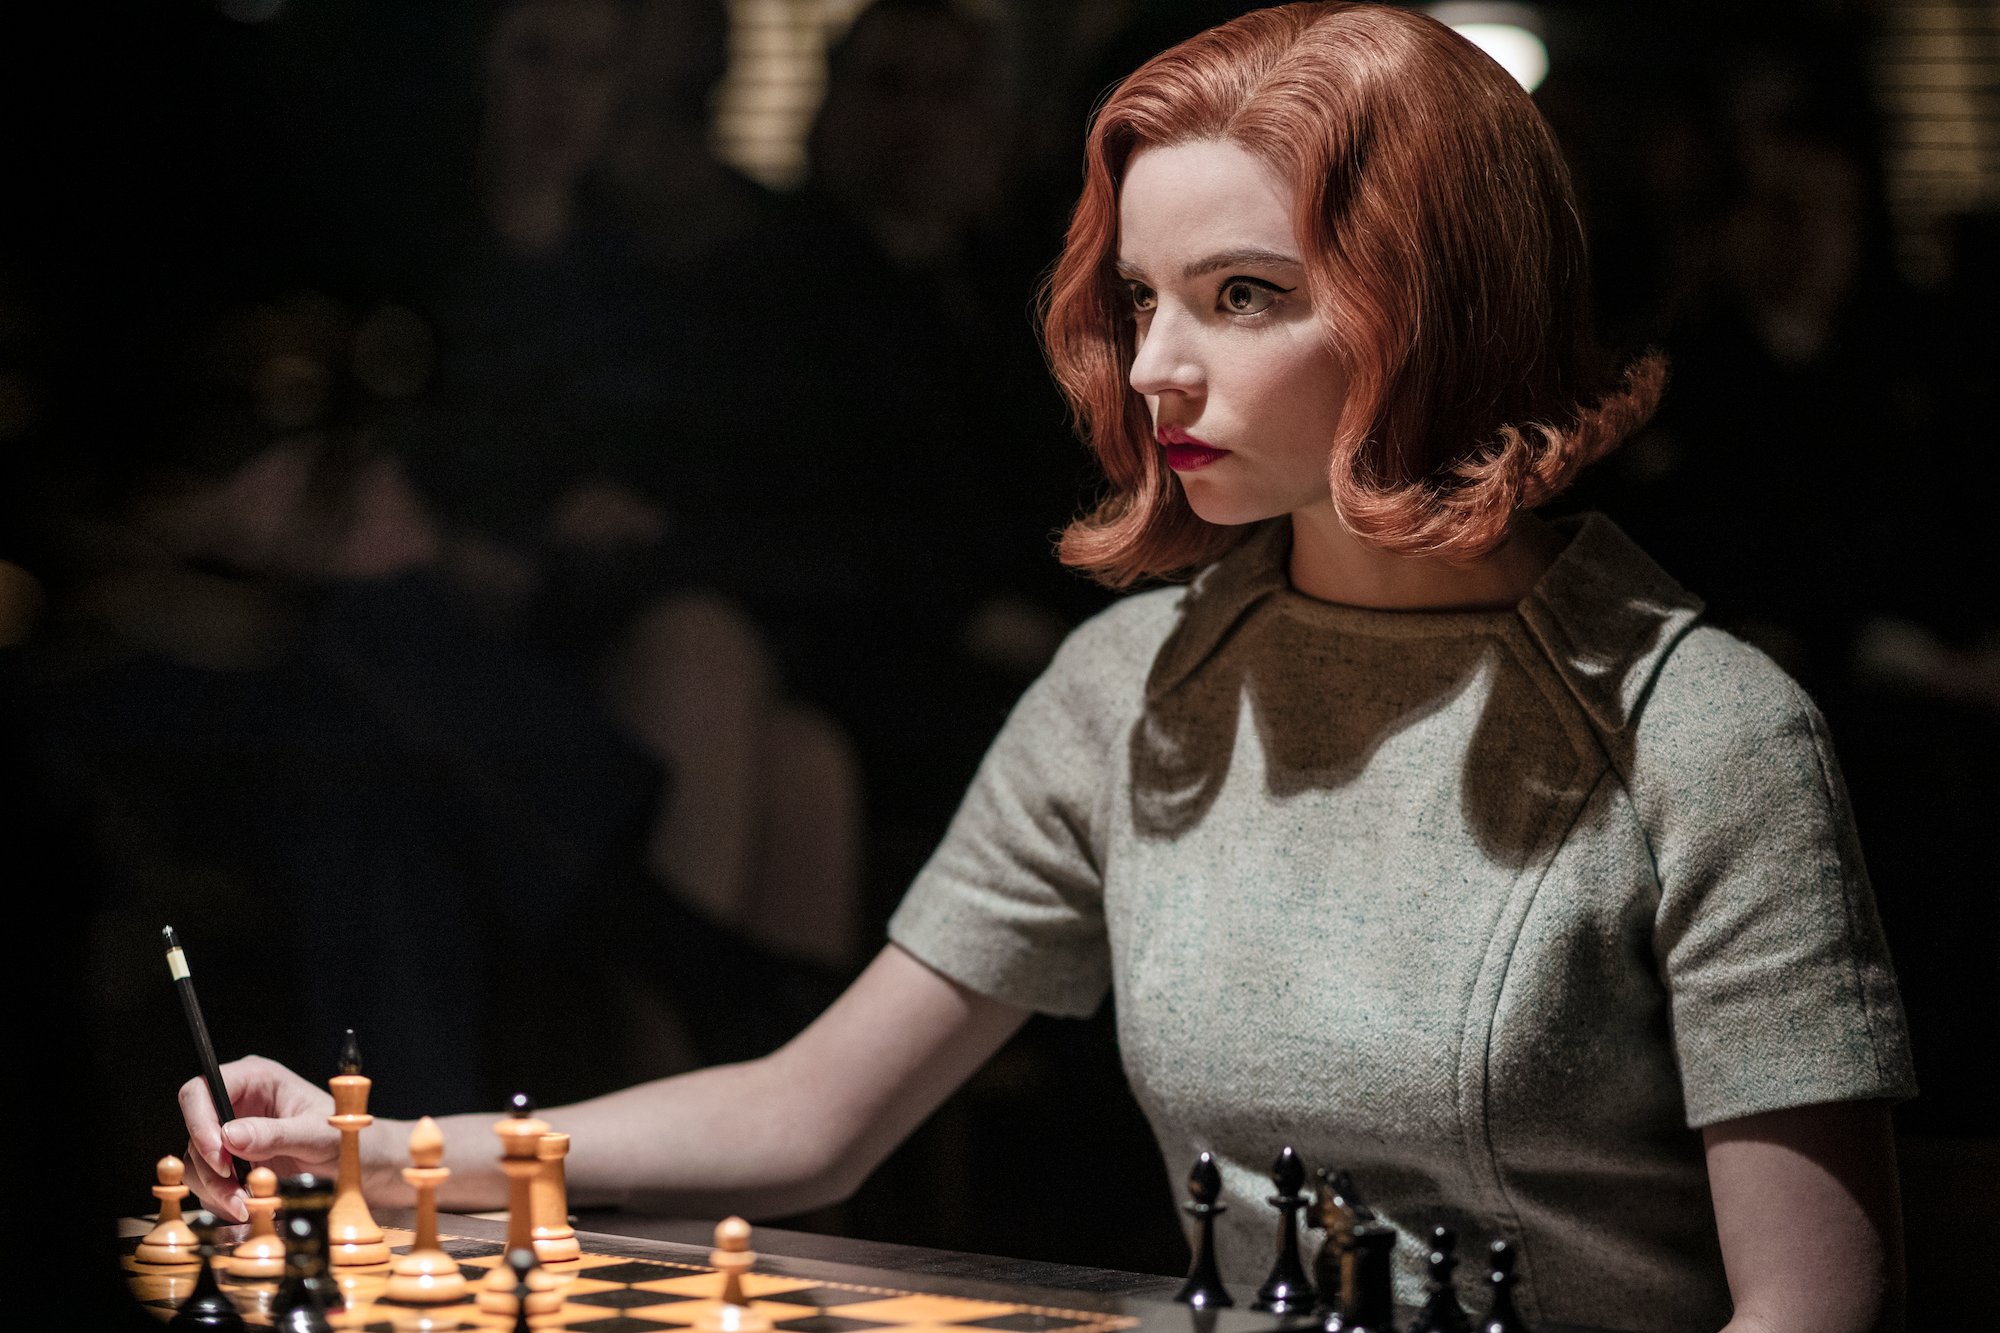 Anya Taylor-Joy as Beth Harmon sitting next to a chess board